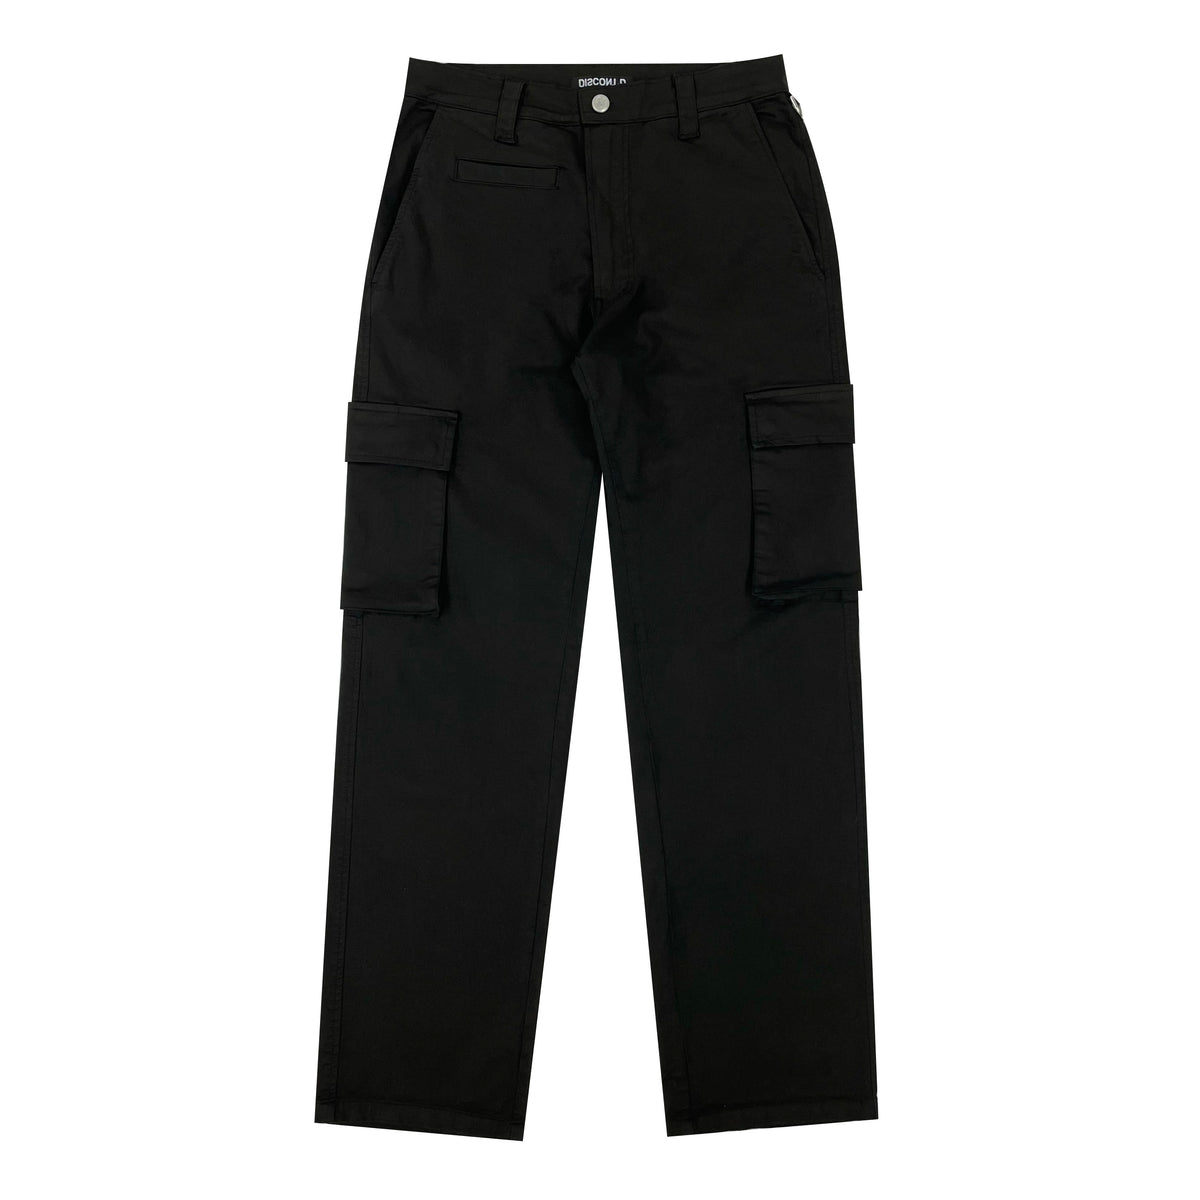 Black Cargo Pants, Free Shipping $80+